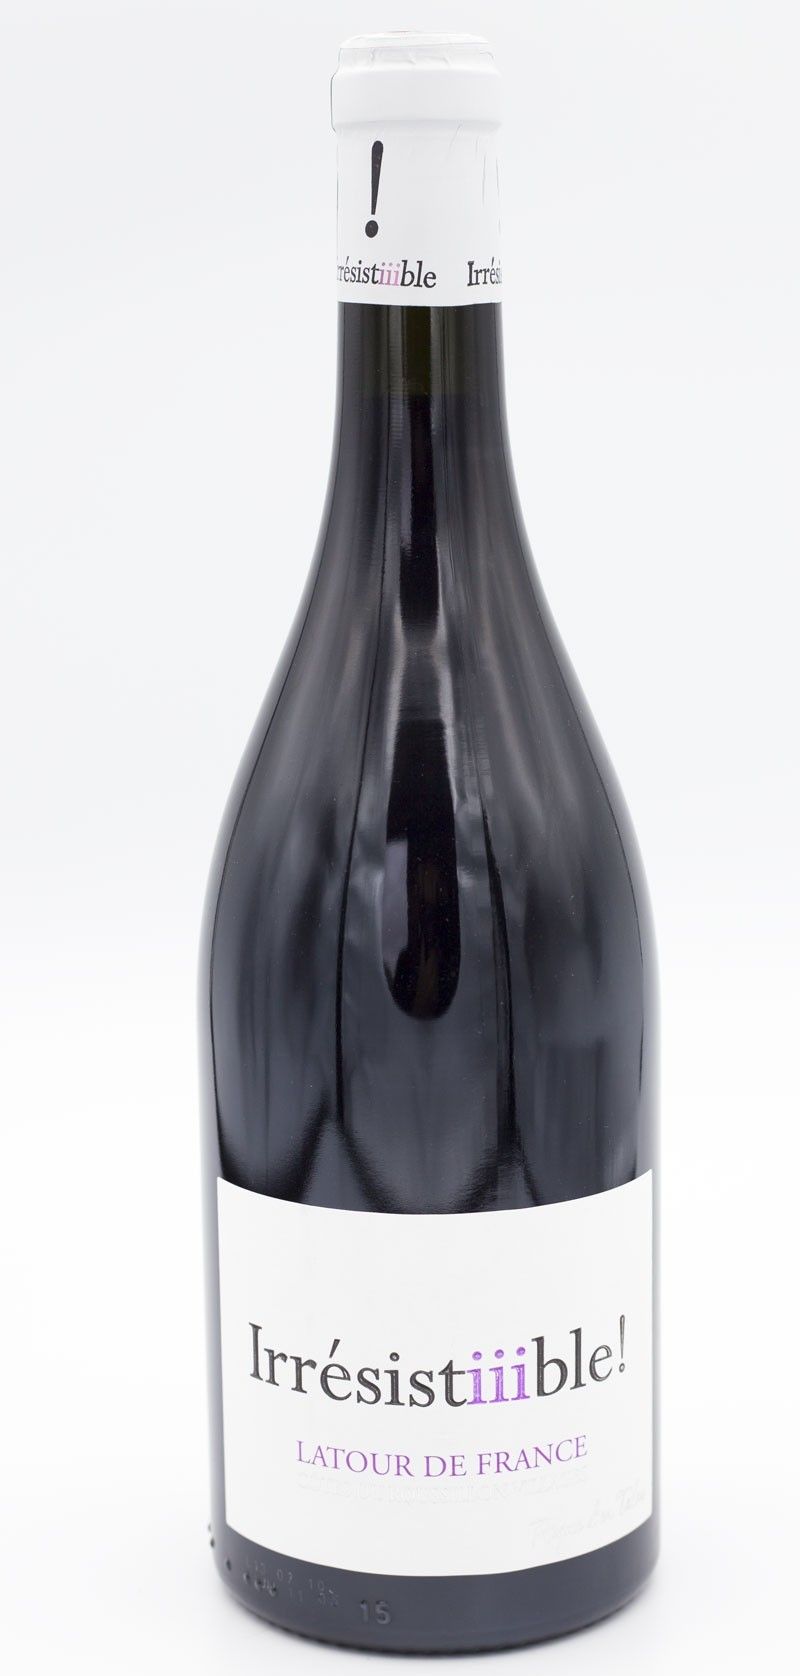 Irresistiiible! Latour de France - Red wine